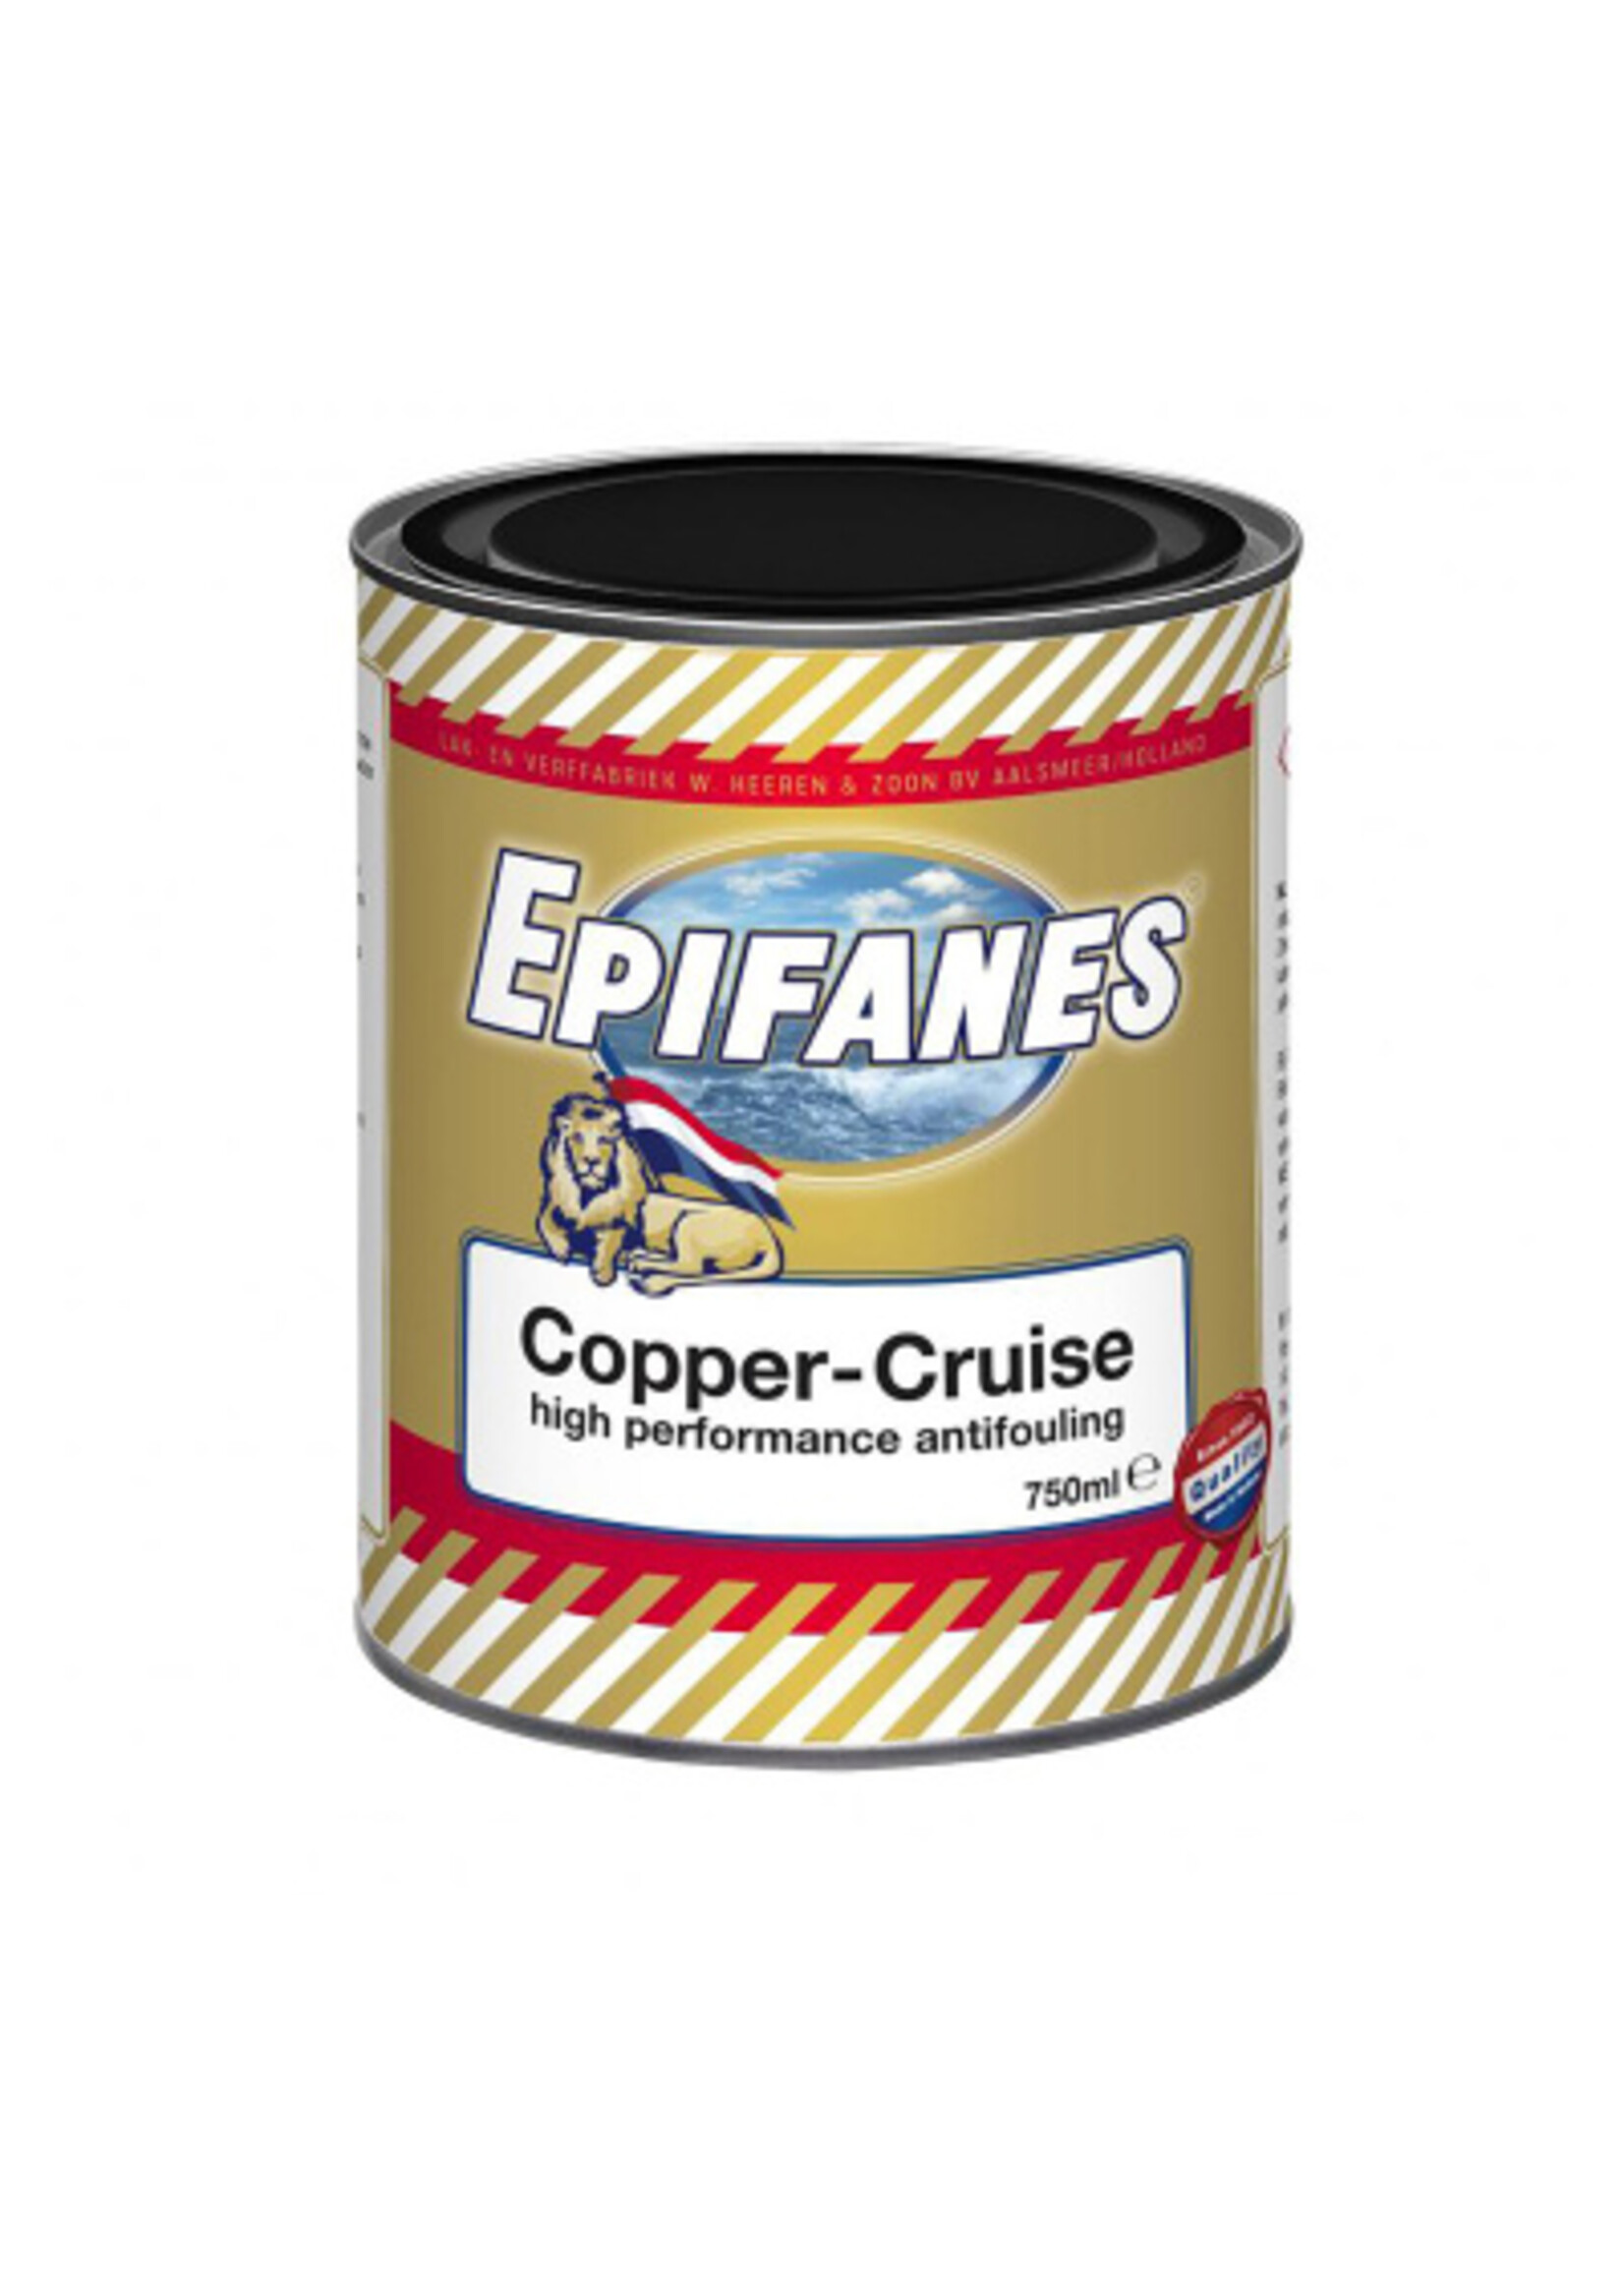 Epifanes Copper-Cruise - Antifouling Donkerblauw